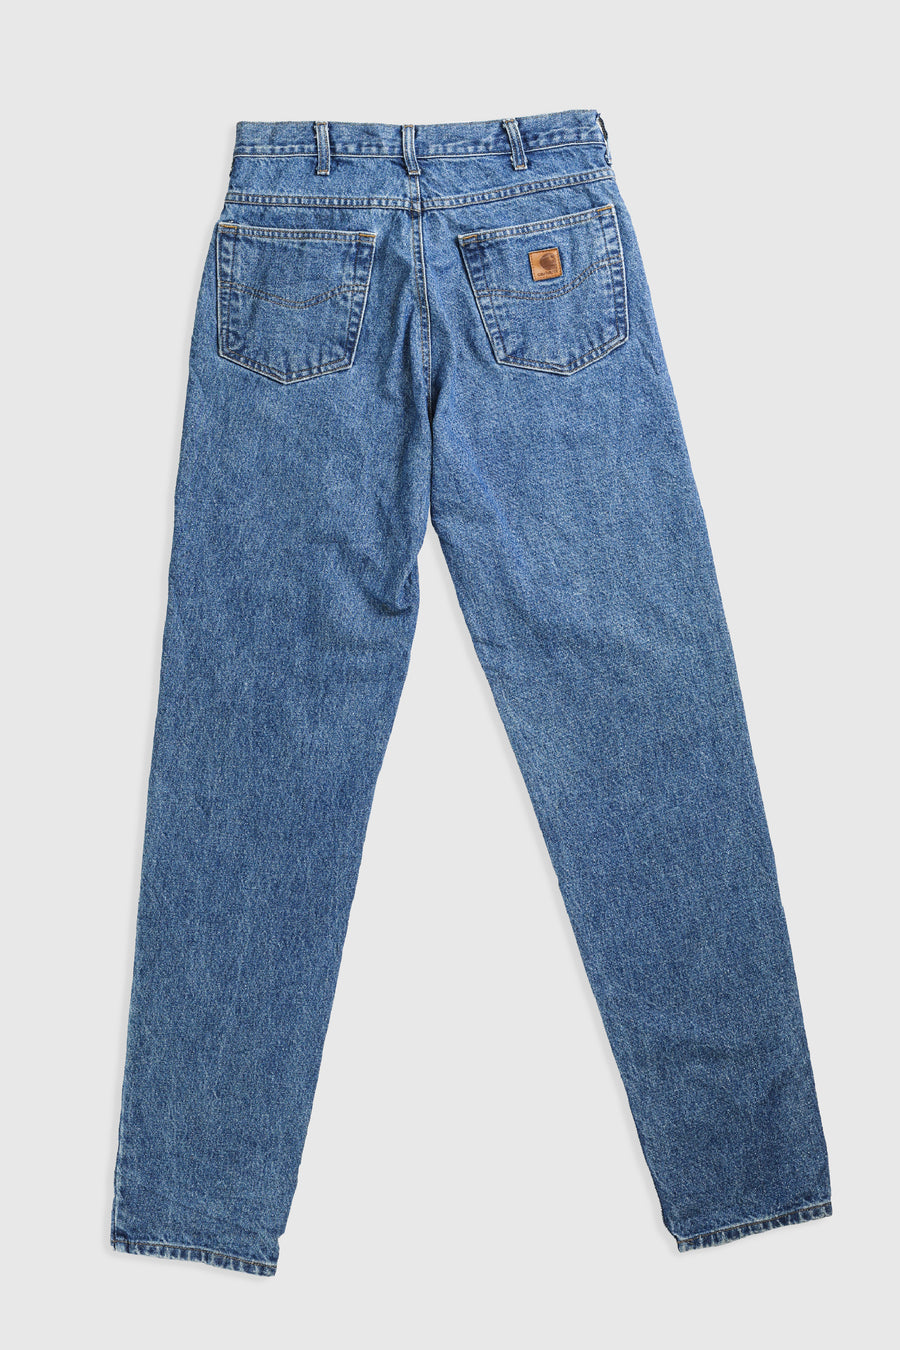 Vintage Carhartt Denim Work Pants - W33